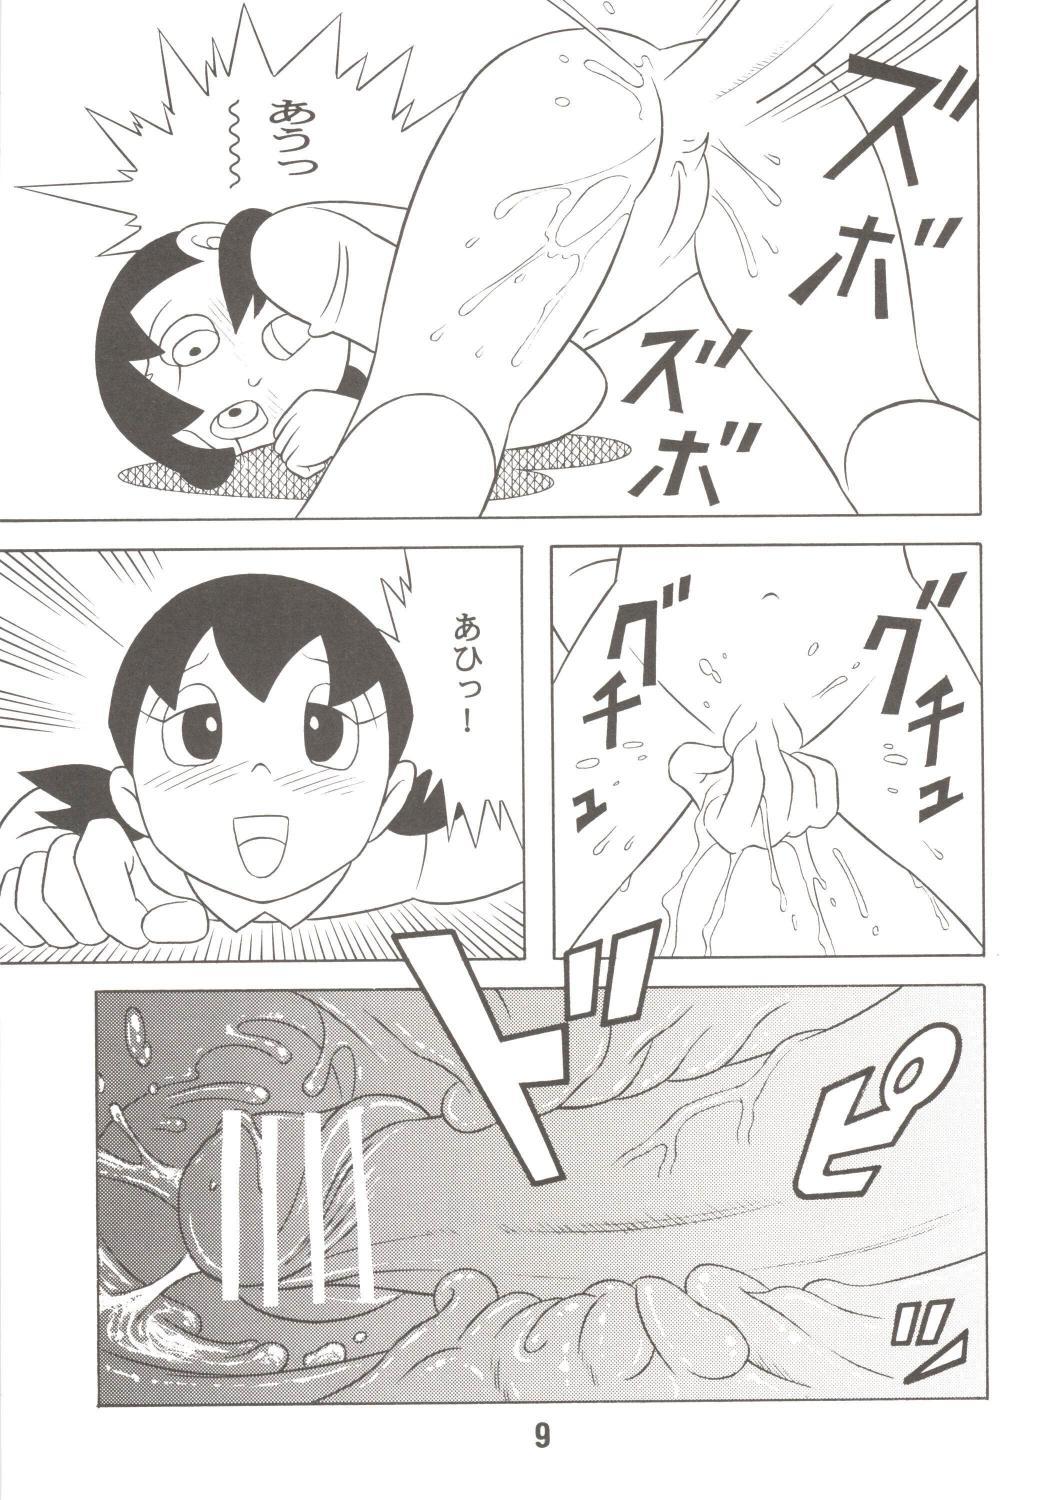 Butts MS / Sizukan - Detective conan Doraemon Gets - Page 9